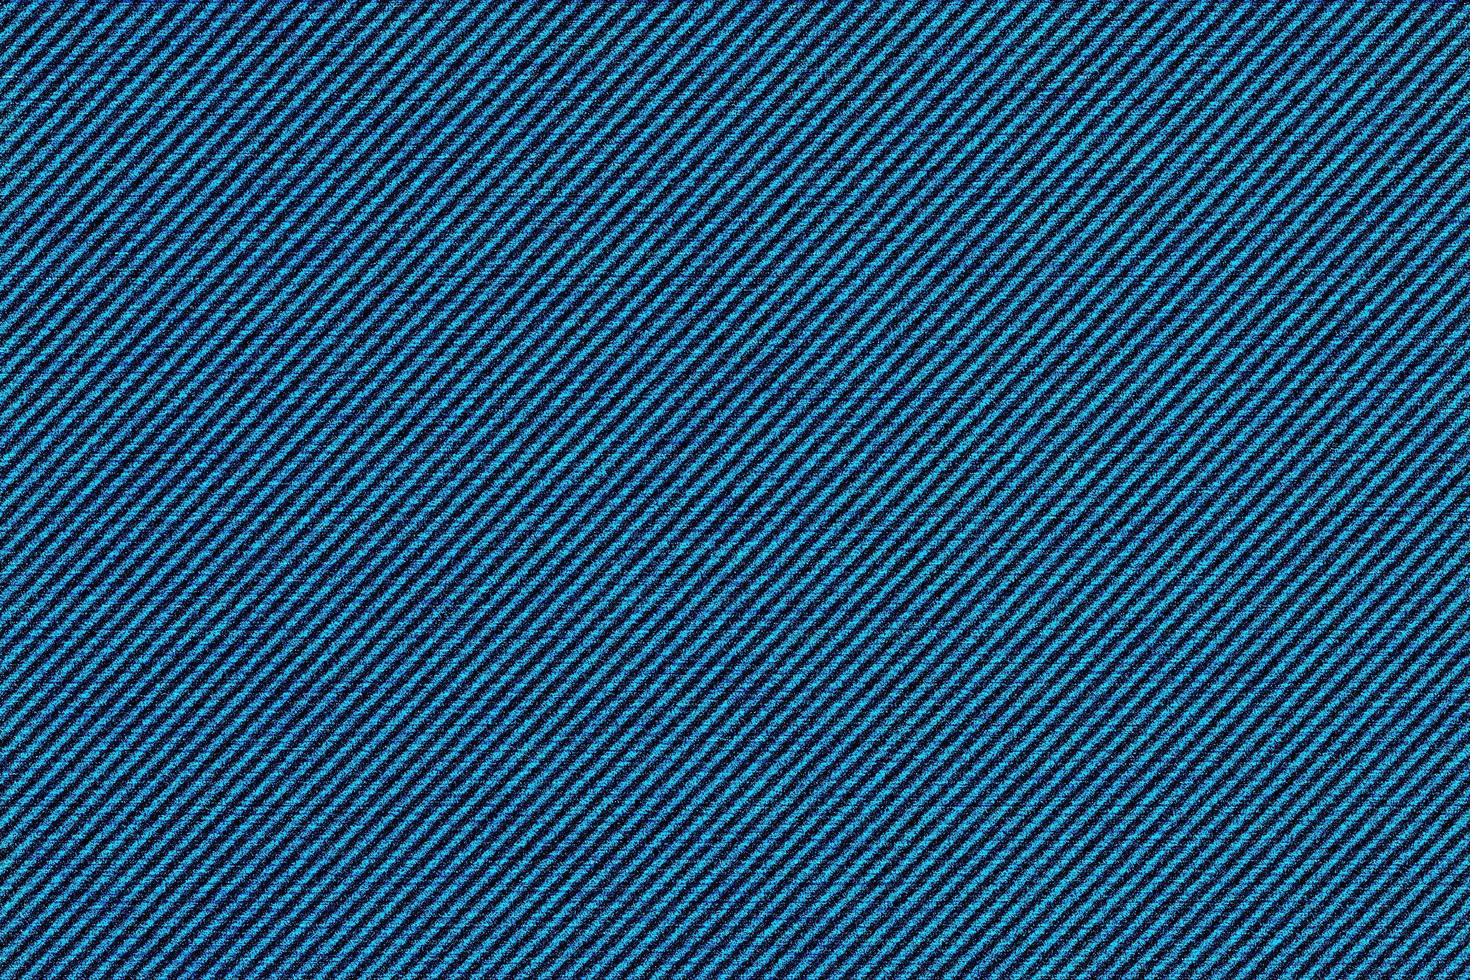 fondo de textura de tela de mezclilla azul oscuro, la tela de algodón fuerte que se usa especialmente para hacer jeans. foto